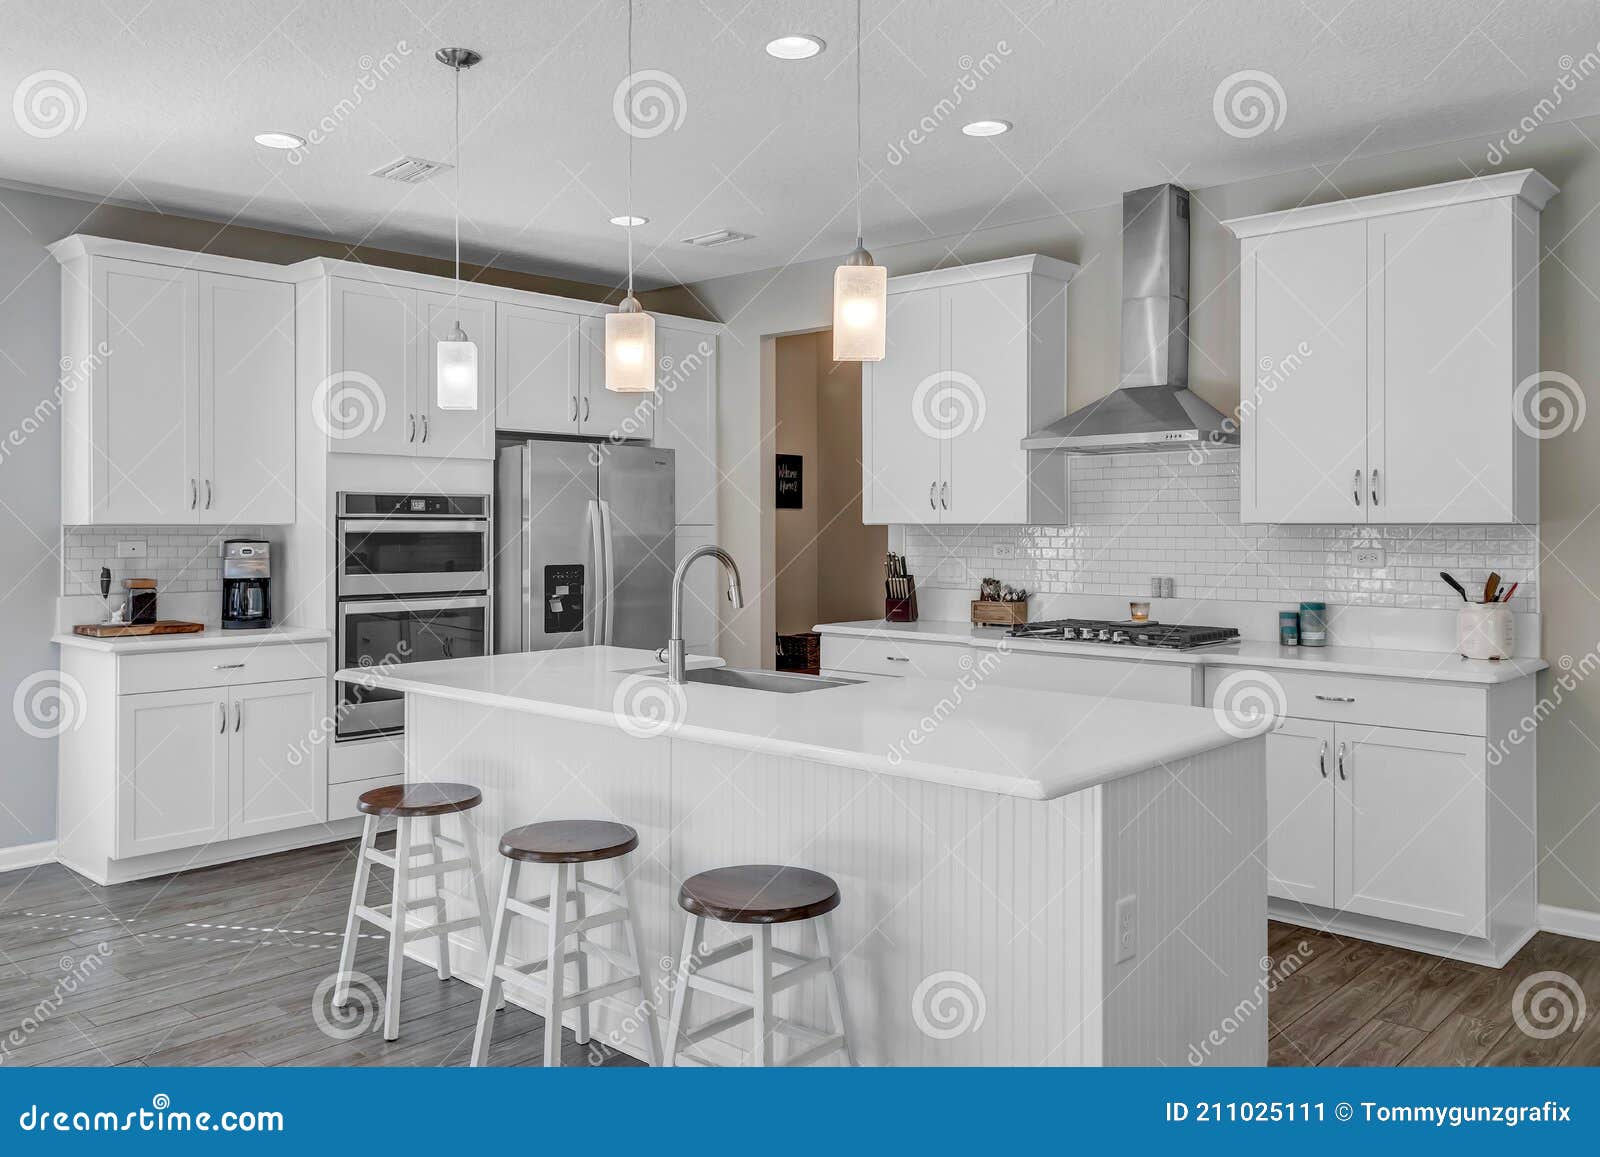 modern and clean white kitchen